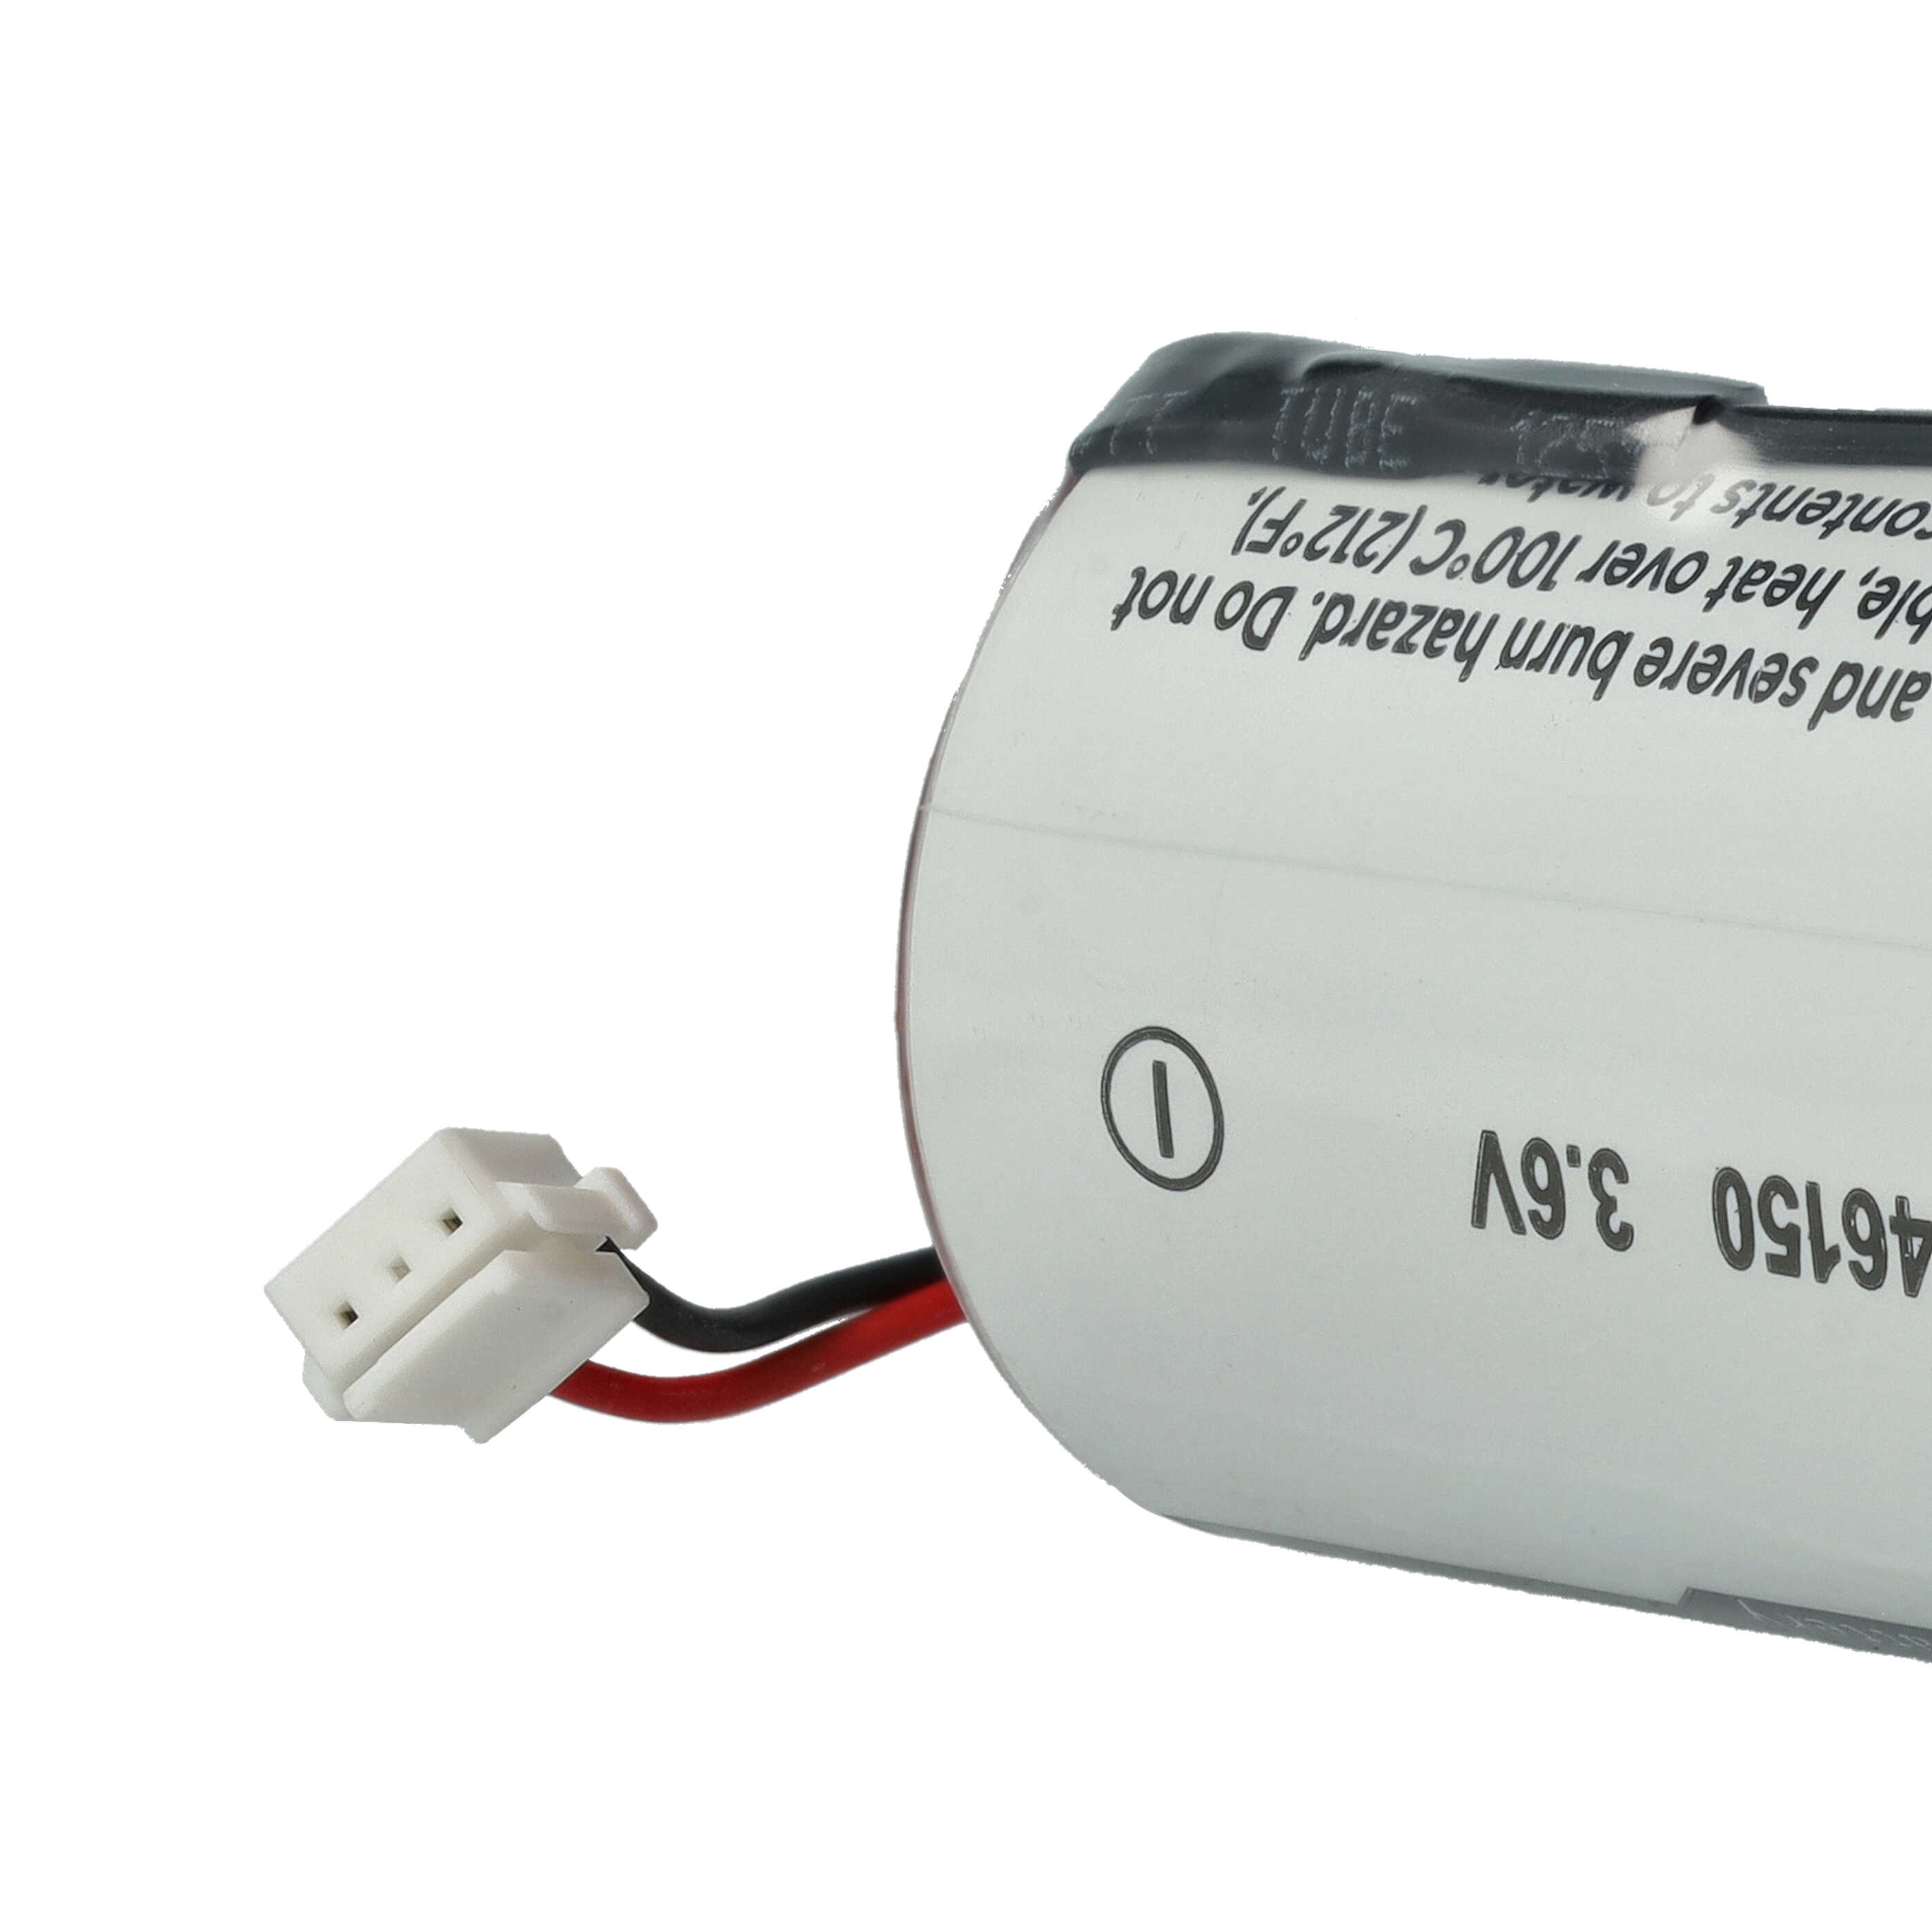 Alarmanlage-Batterie als Ersatz für DSC ER34615M-T1, ER346150, WT4911BATT - 14500mAh 3,6V Li-MnO2